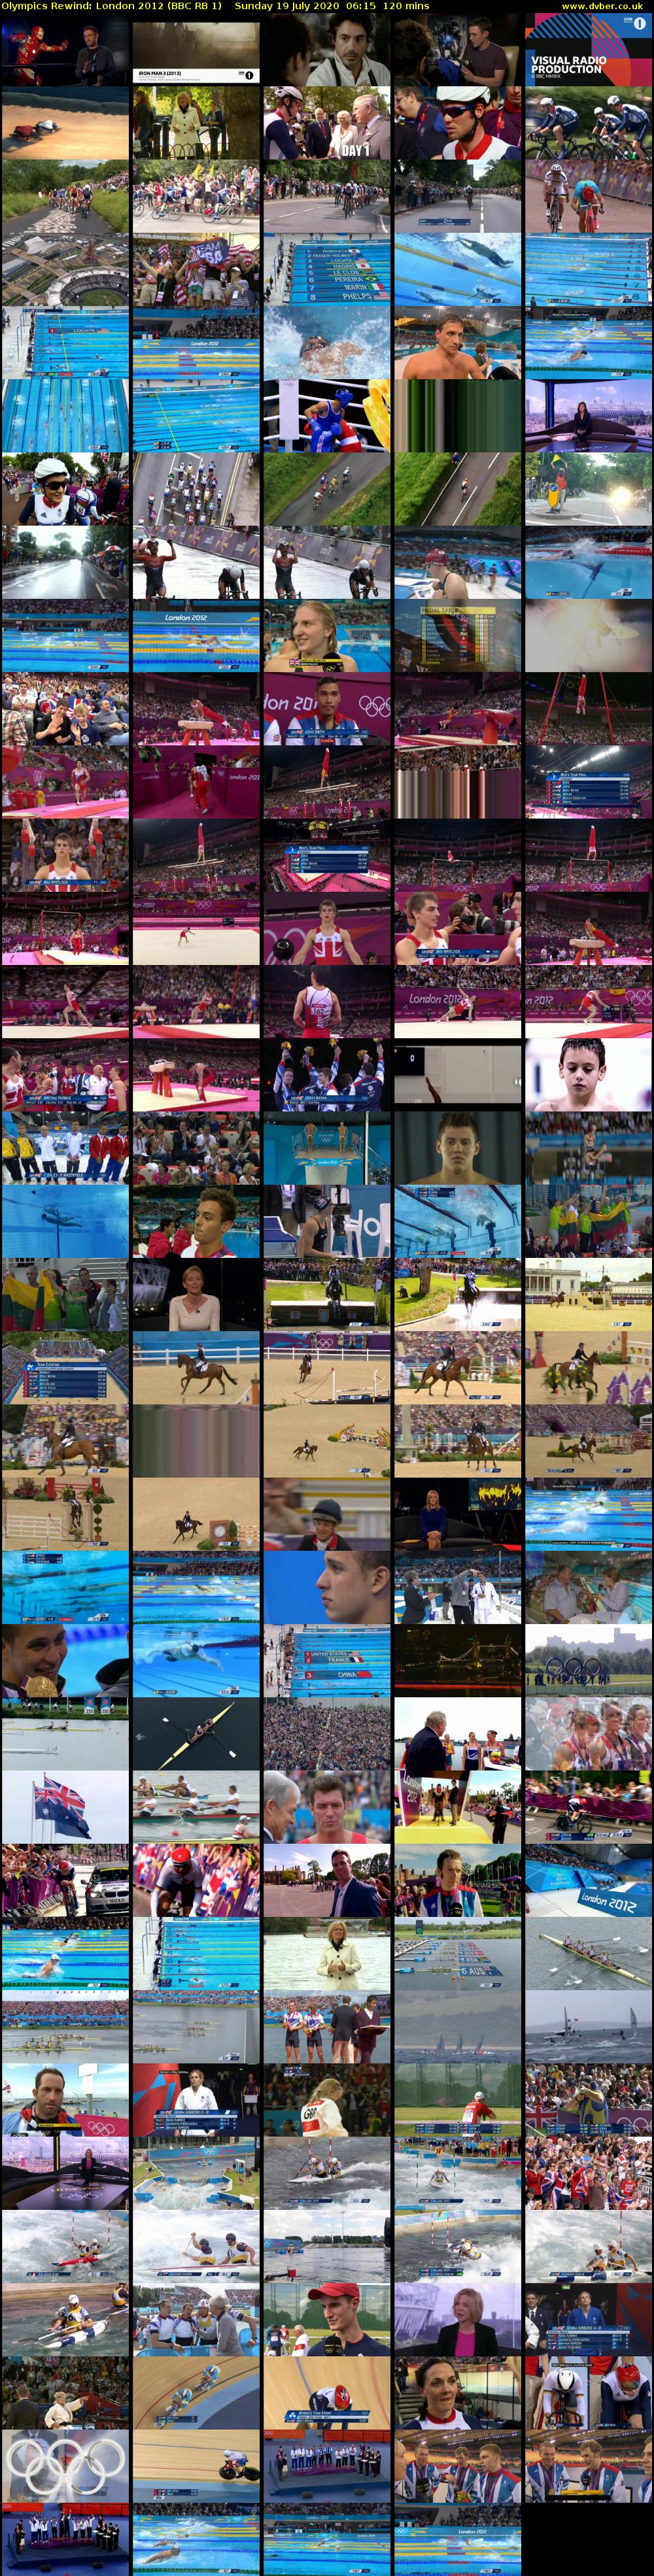 Olympics Rewind: London 2012 (BBC RB 1) Sunday 19 July 2020 06:15 - 08:15